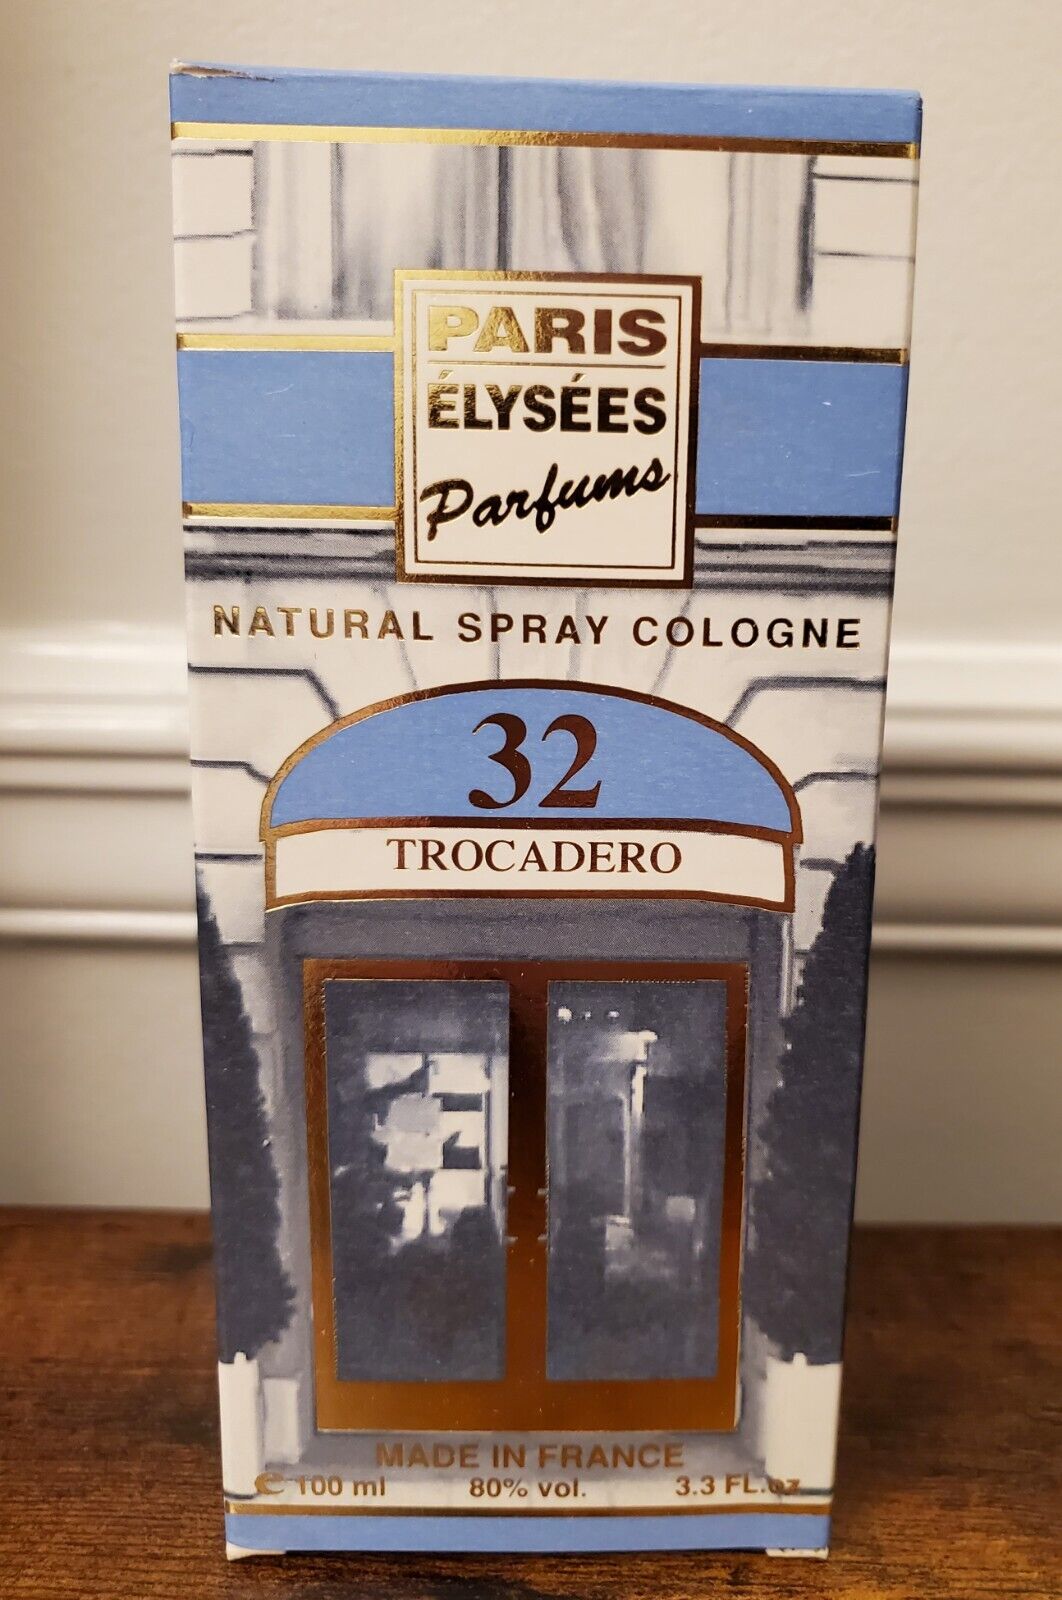 PARIS ELYSEES Parfums Natural Spray Cologne 32 Trocadero 3.3 oz FRANCE Vintage